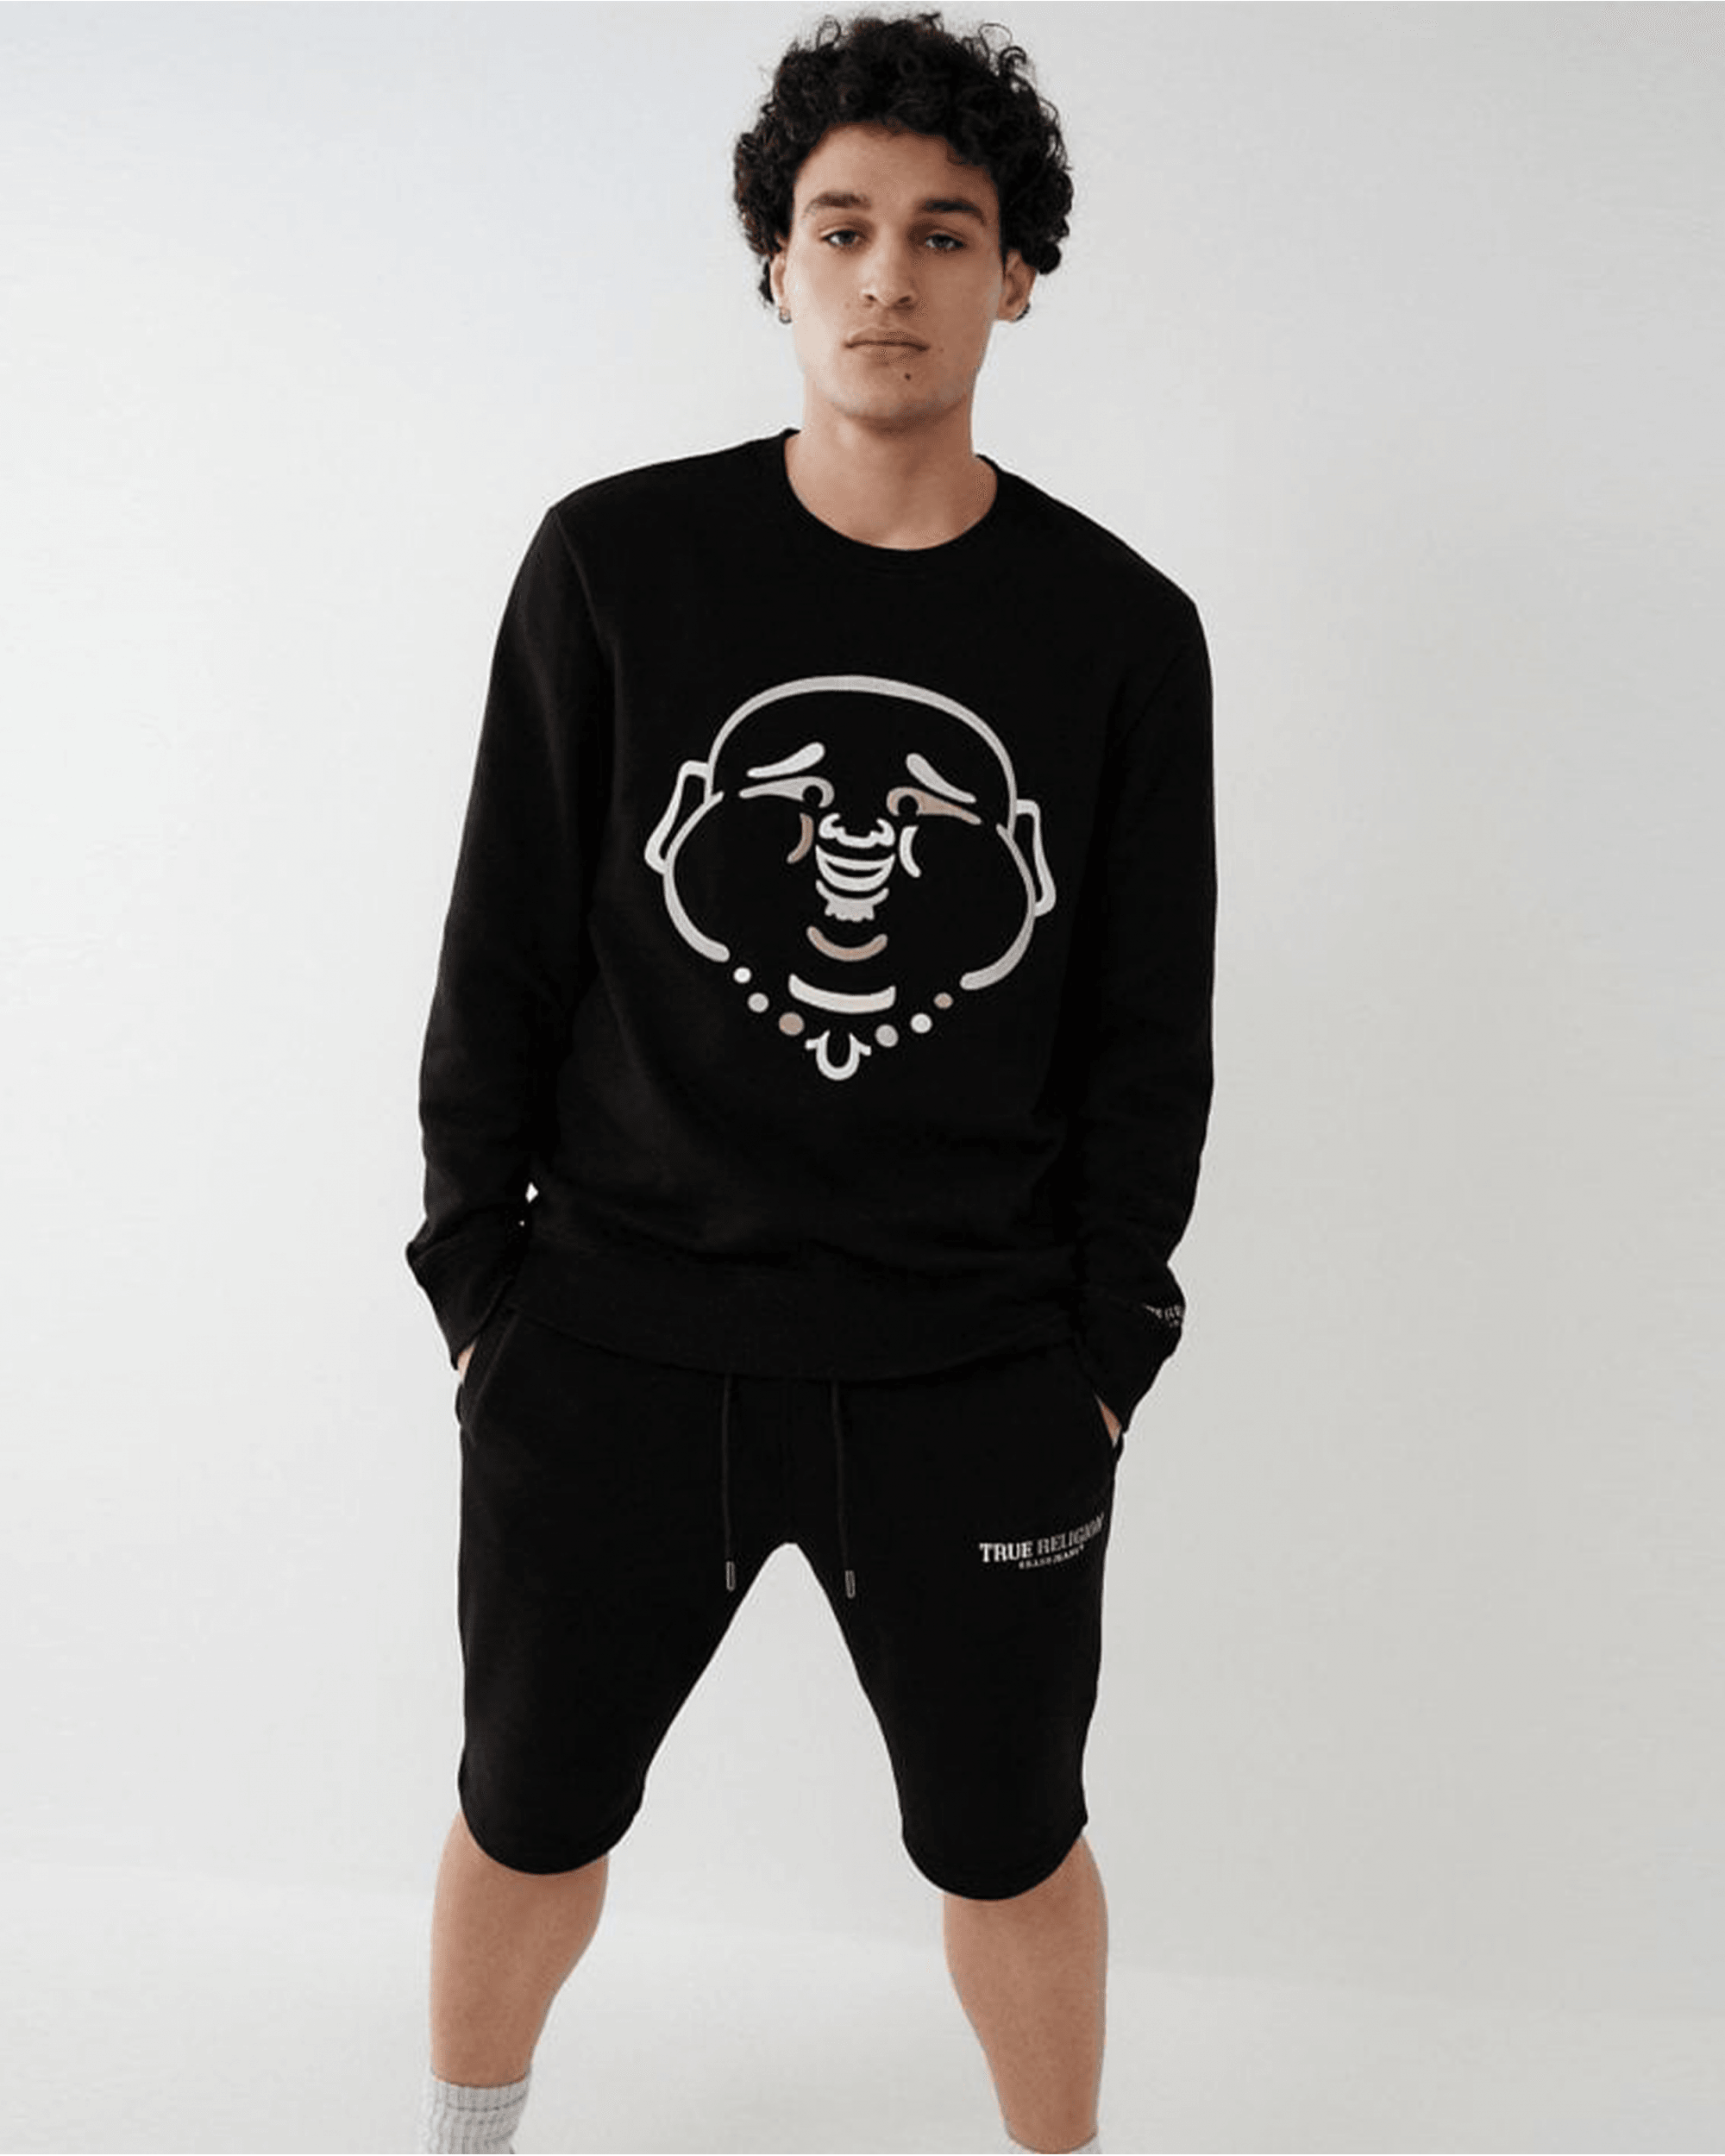 Sweatshirt True Religion Iconic Designs Fashion Trends